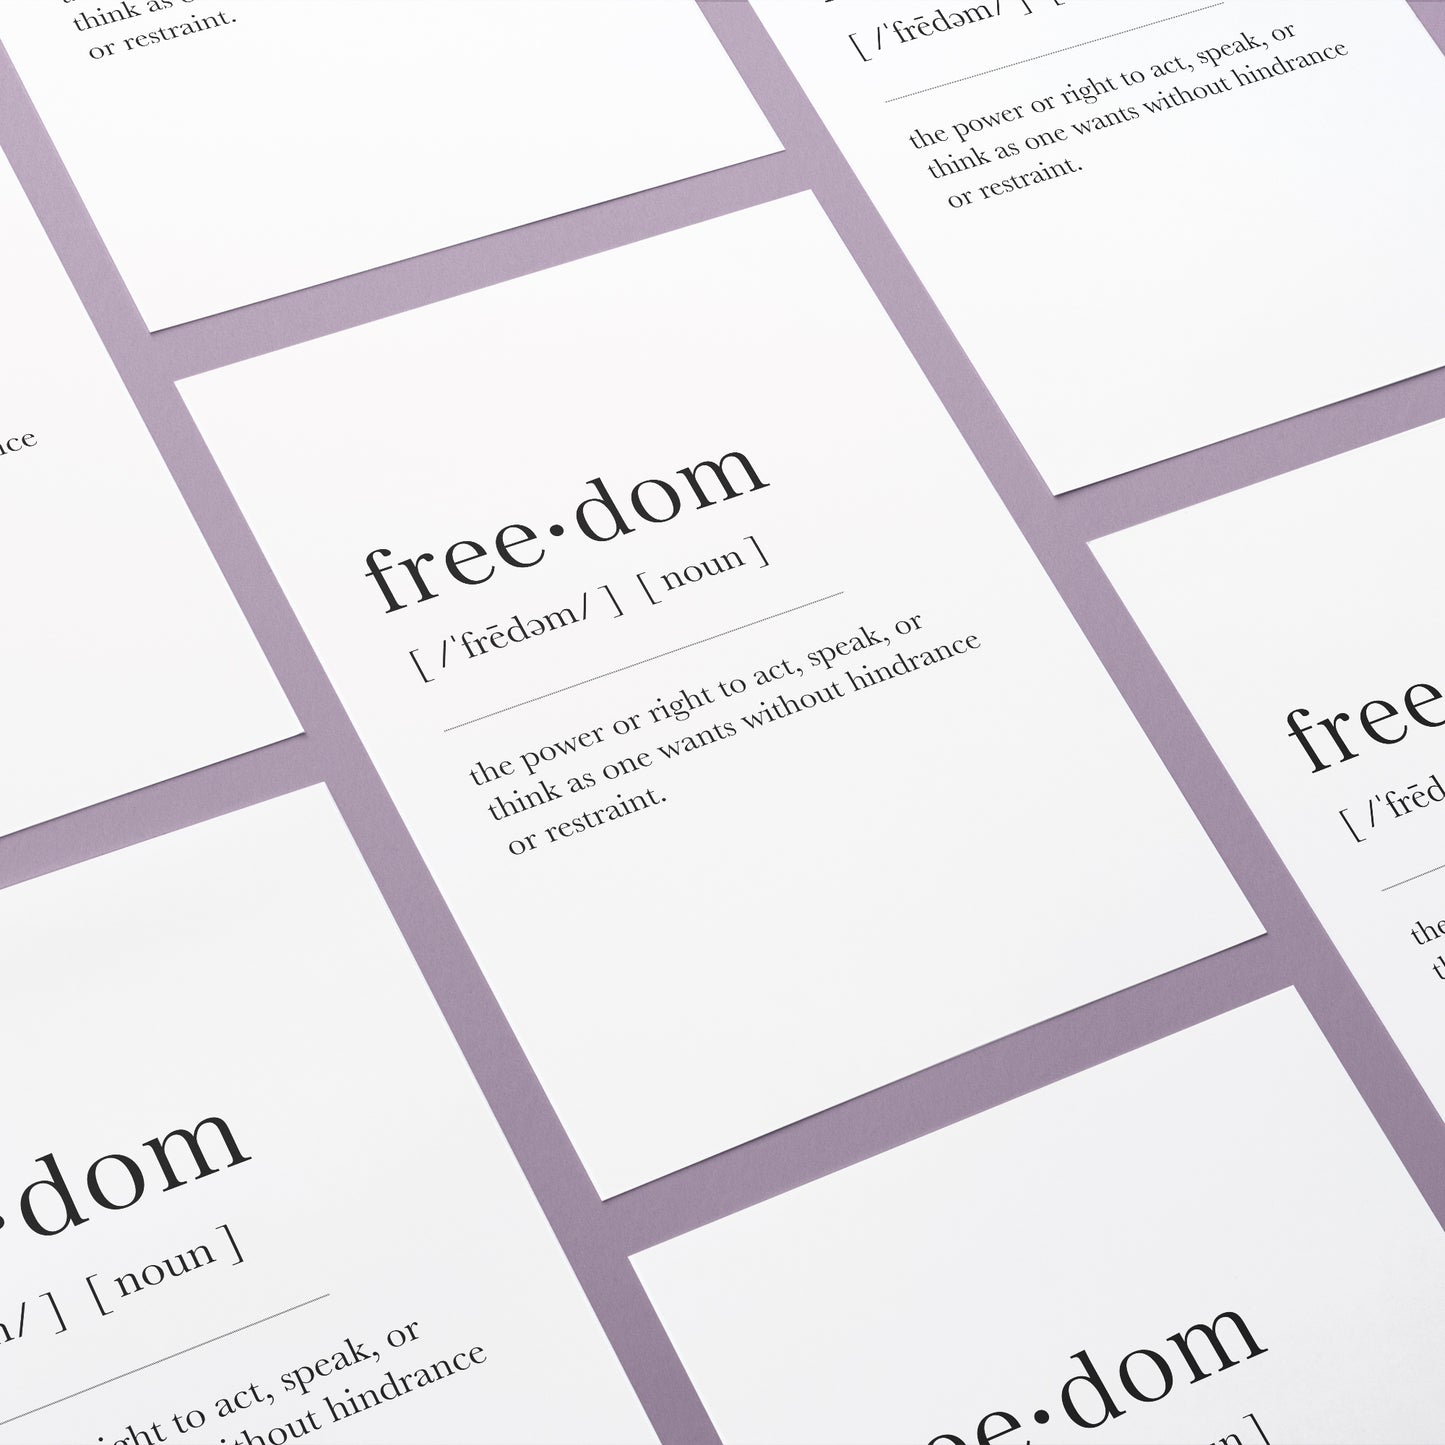 Free·dom Definition Prints